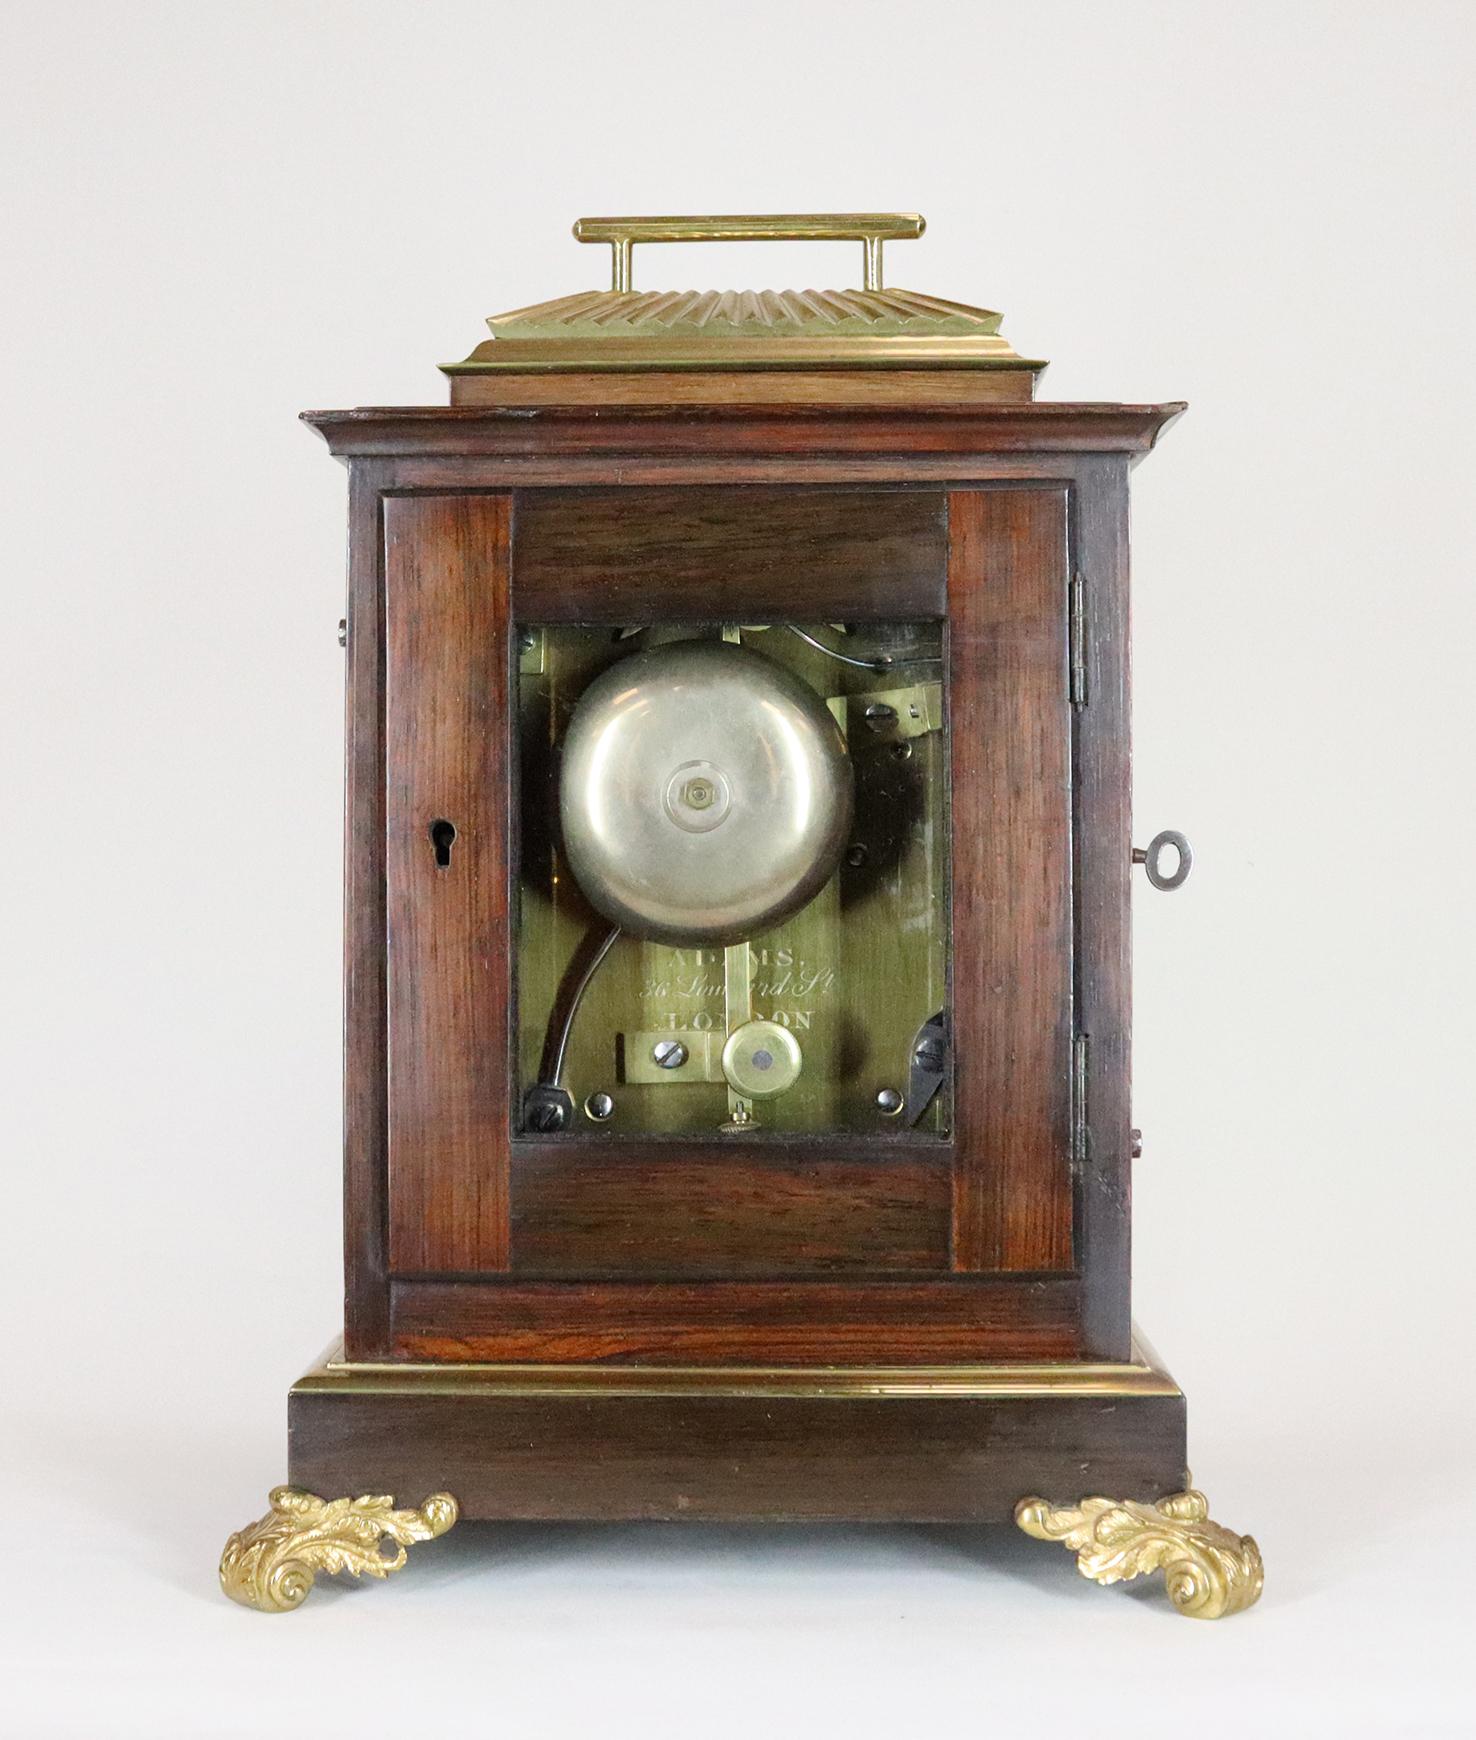 English A Diminutive Bracket Clock by Adams of Lombard Street For Sale